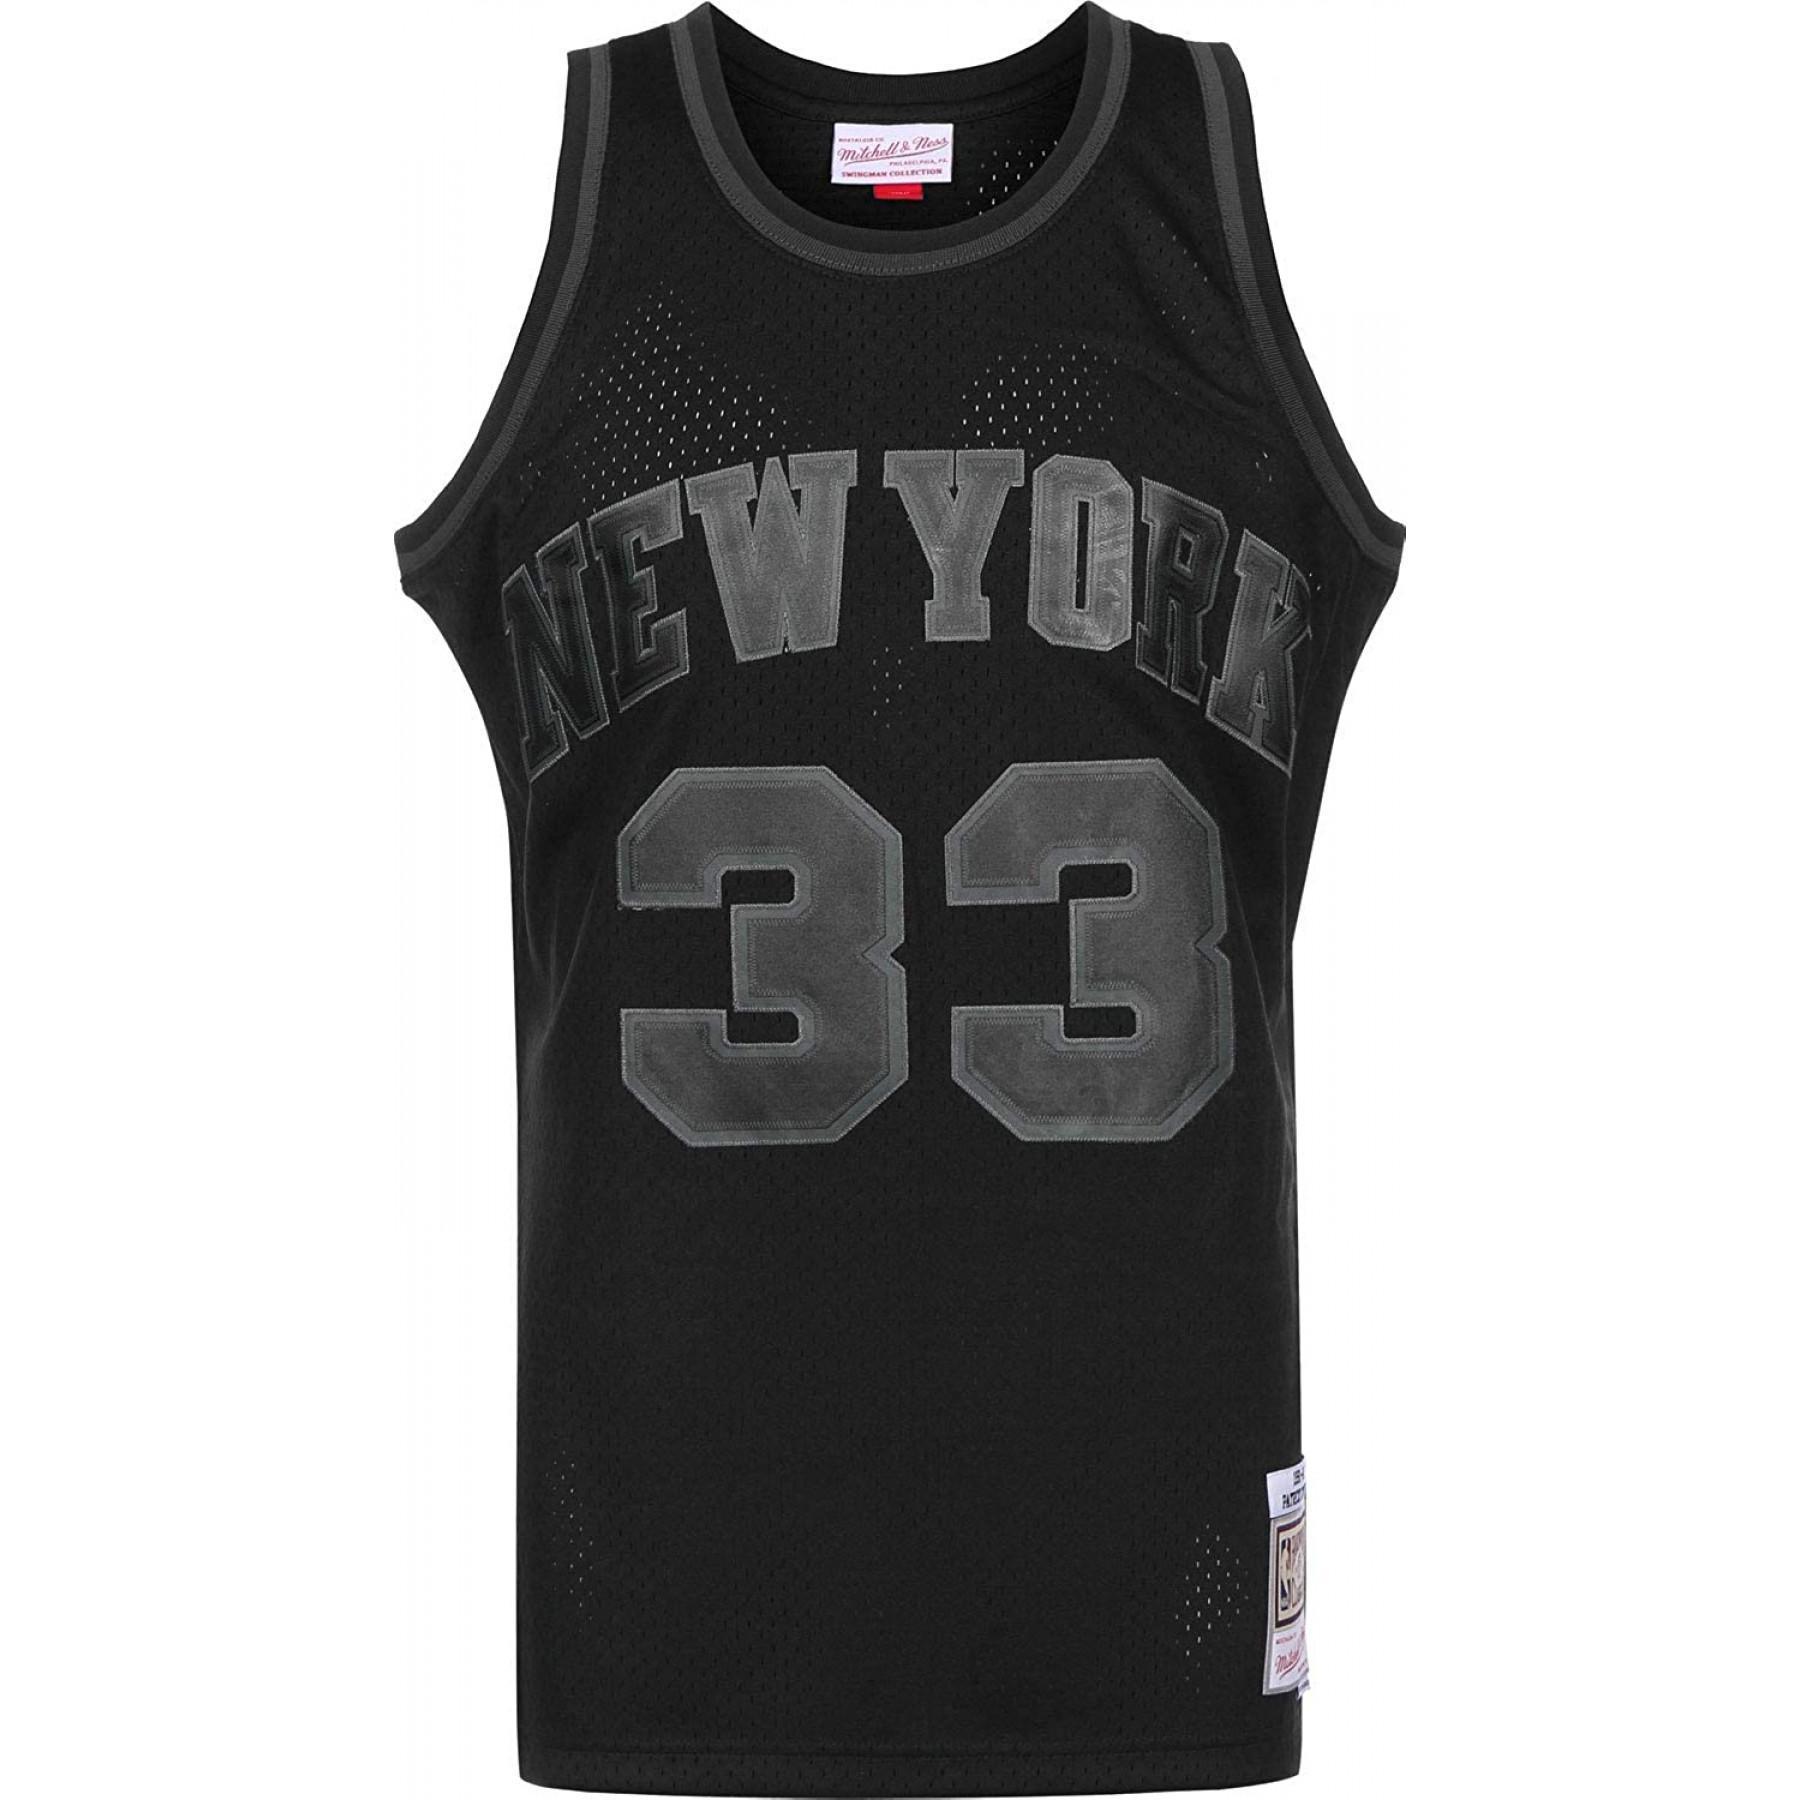 Maillot New York Knicks black on black Patrick Ewing